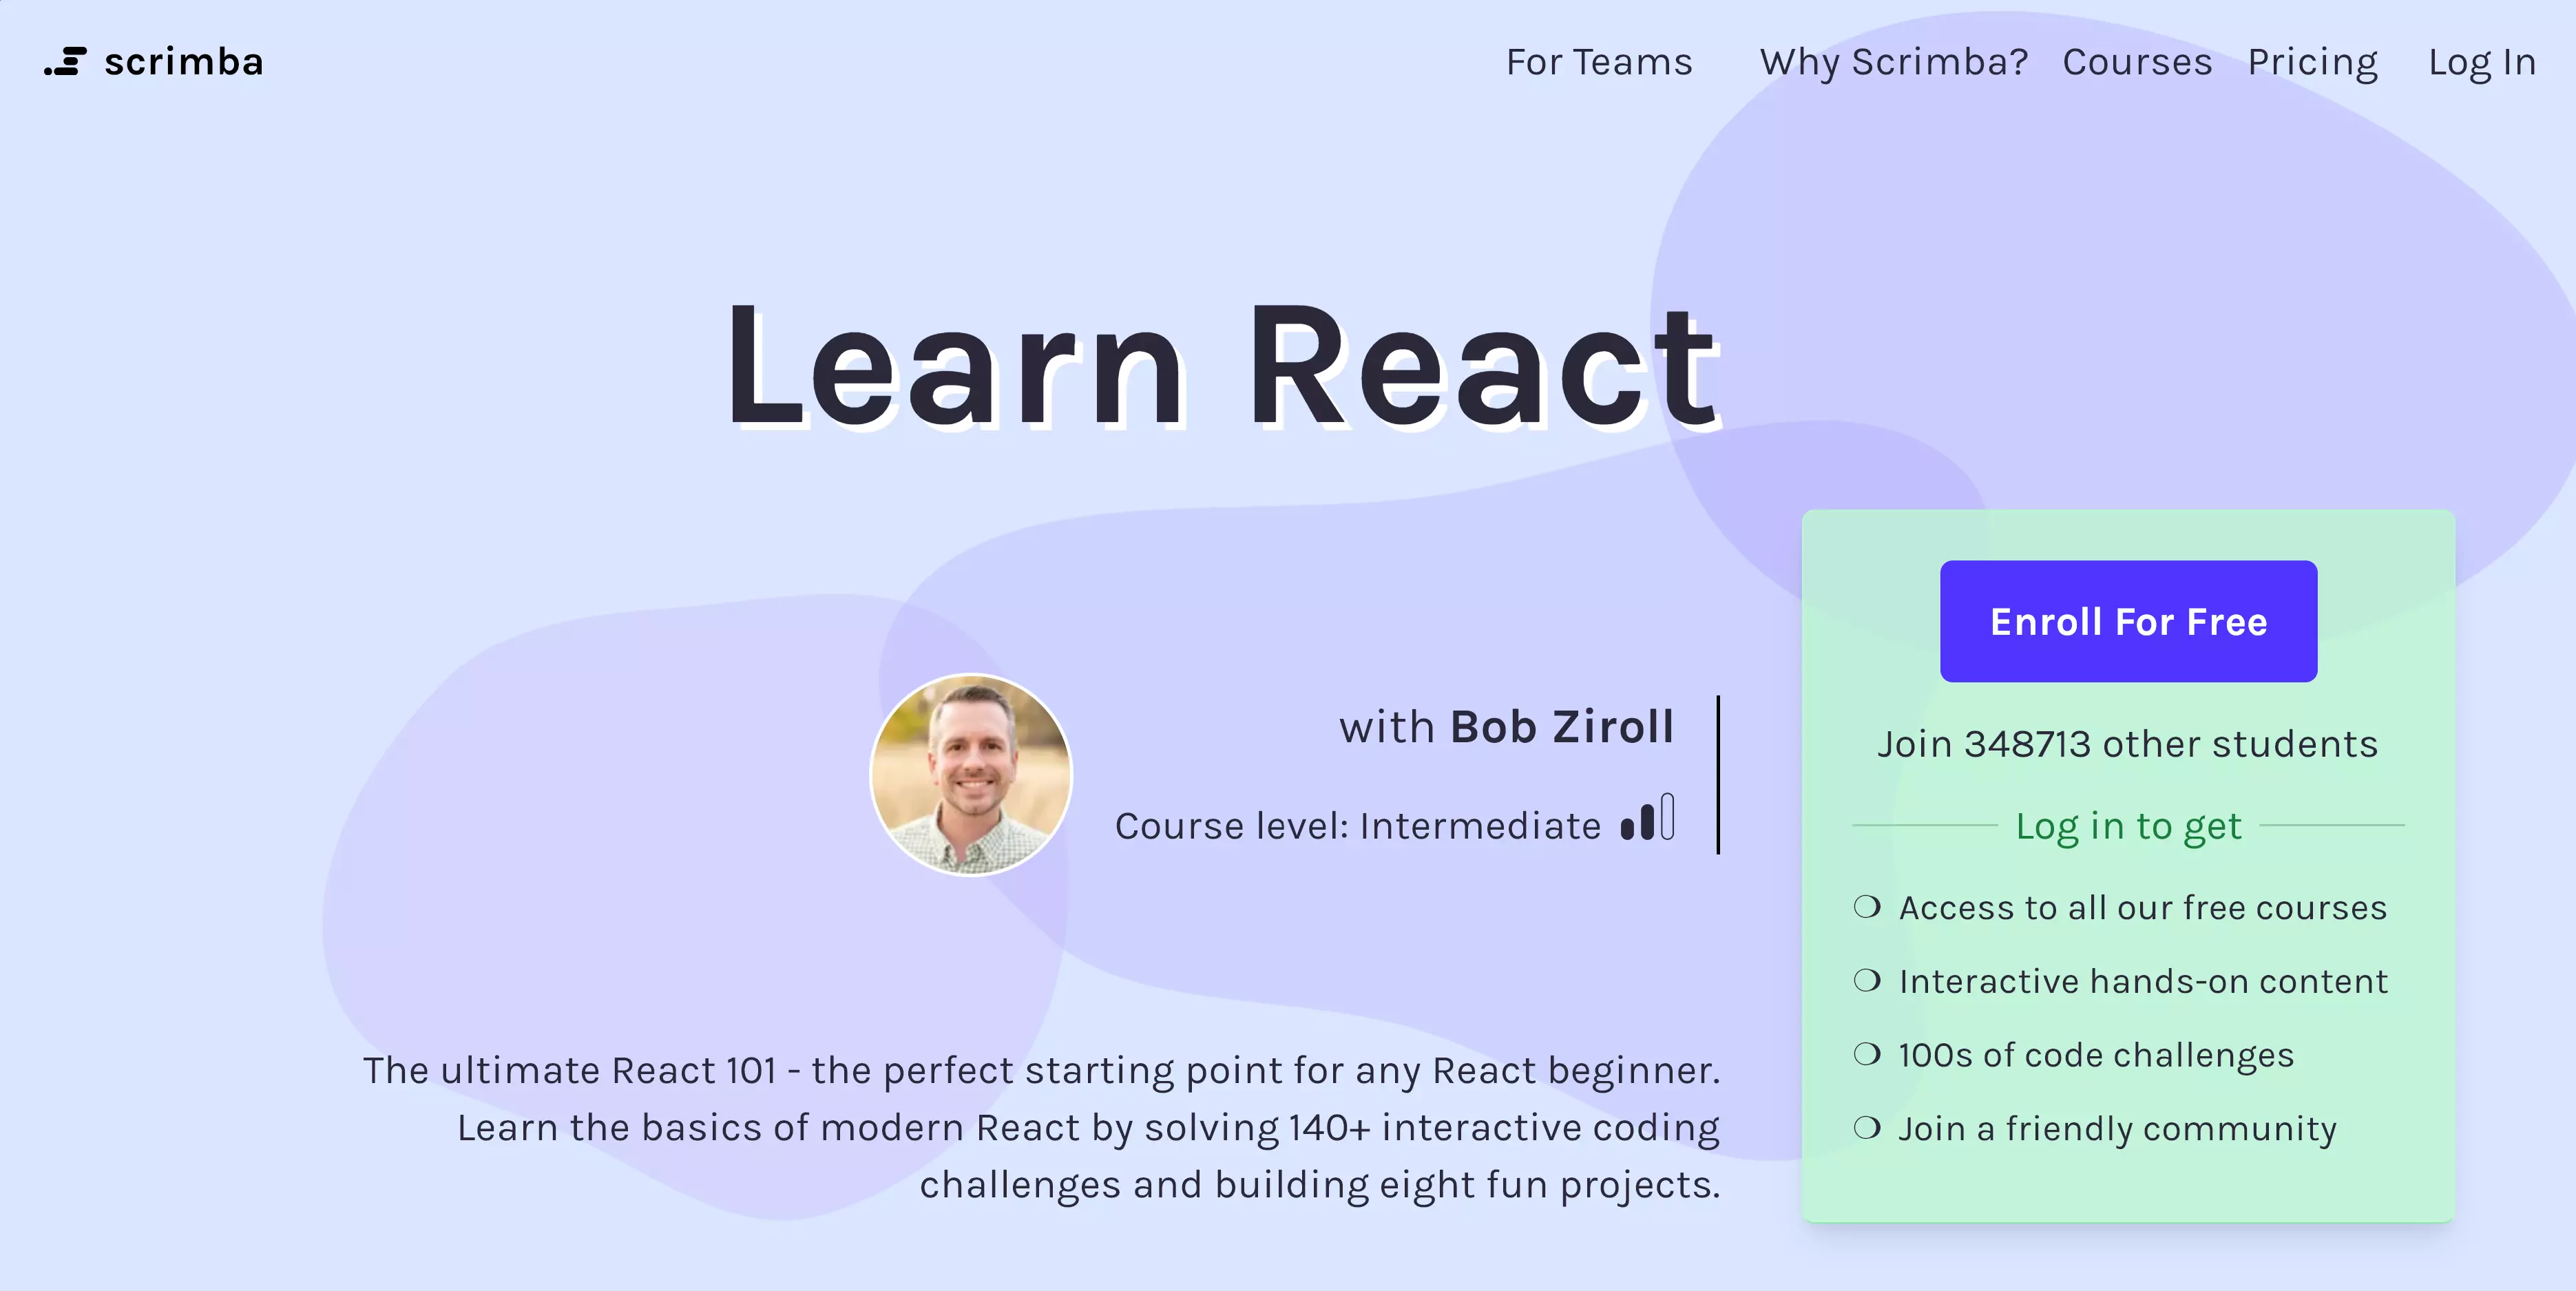 Learn React course on Scrimba